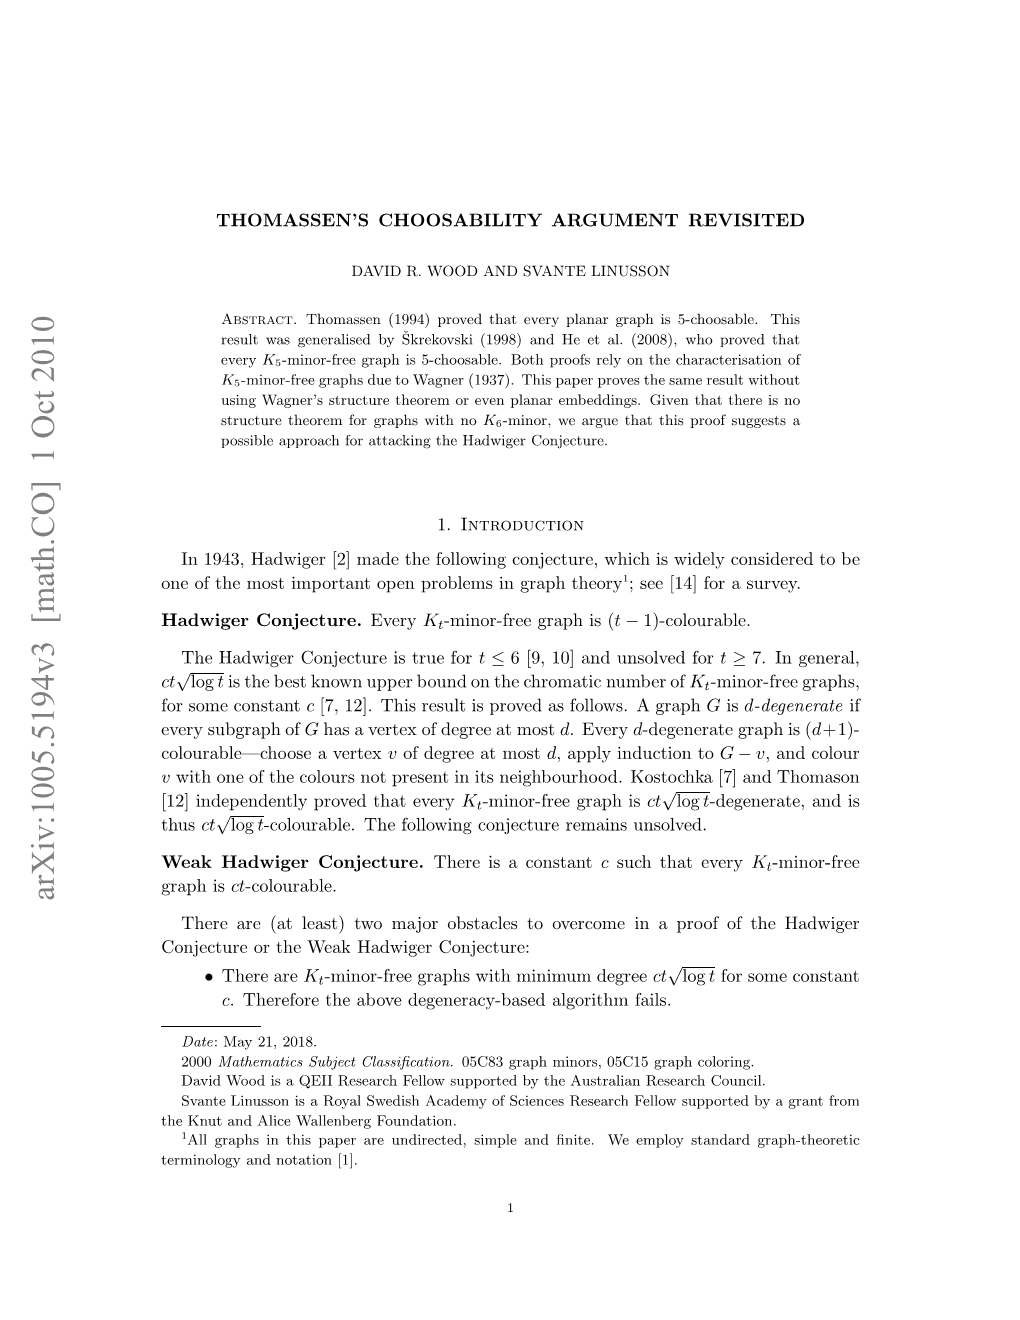 Thomassen's Choosability Argument Revisited